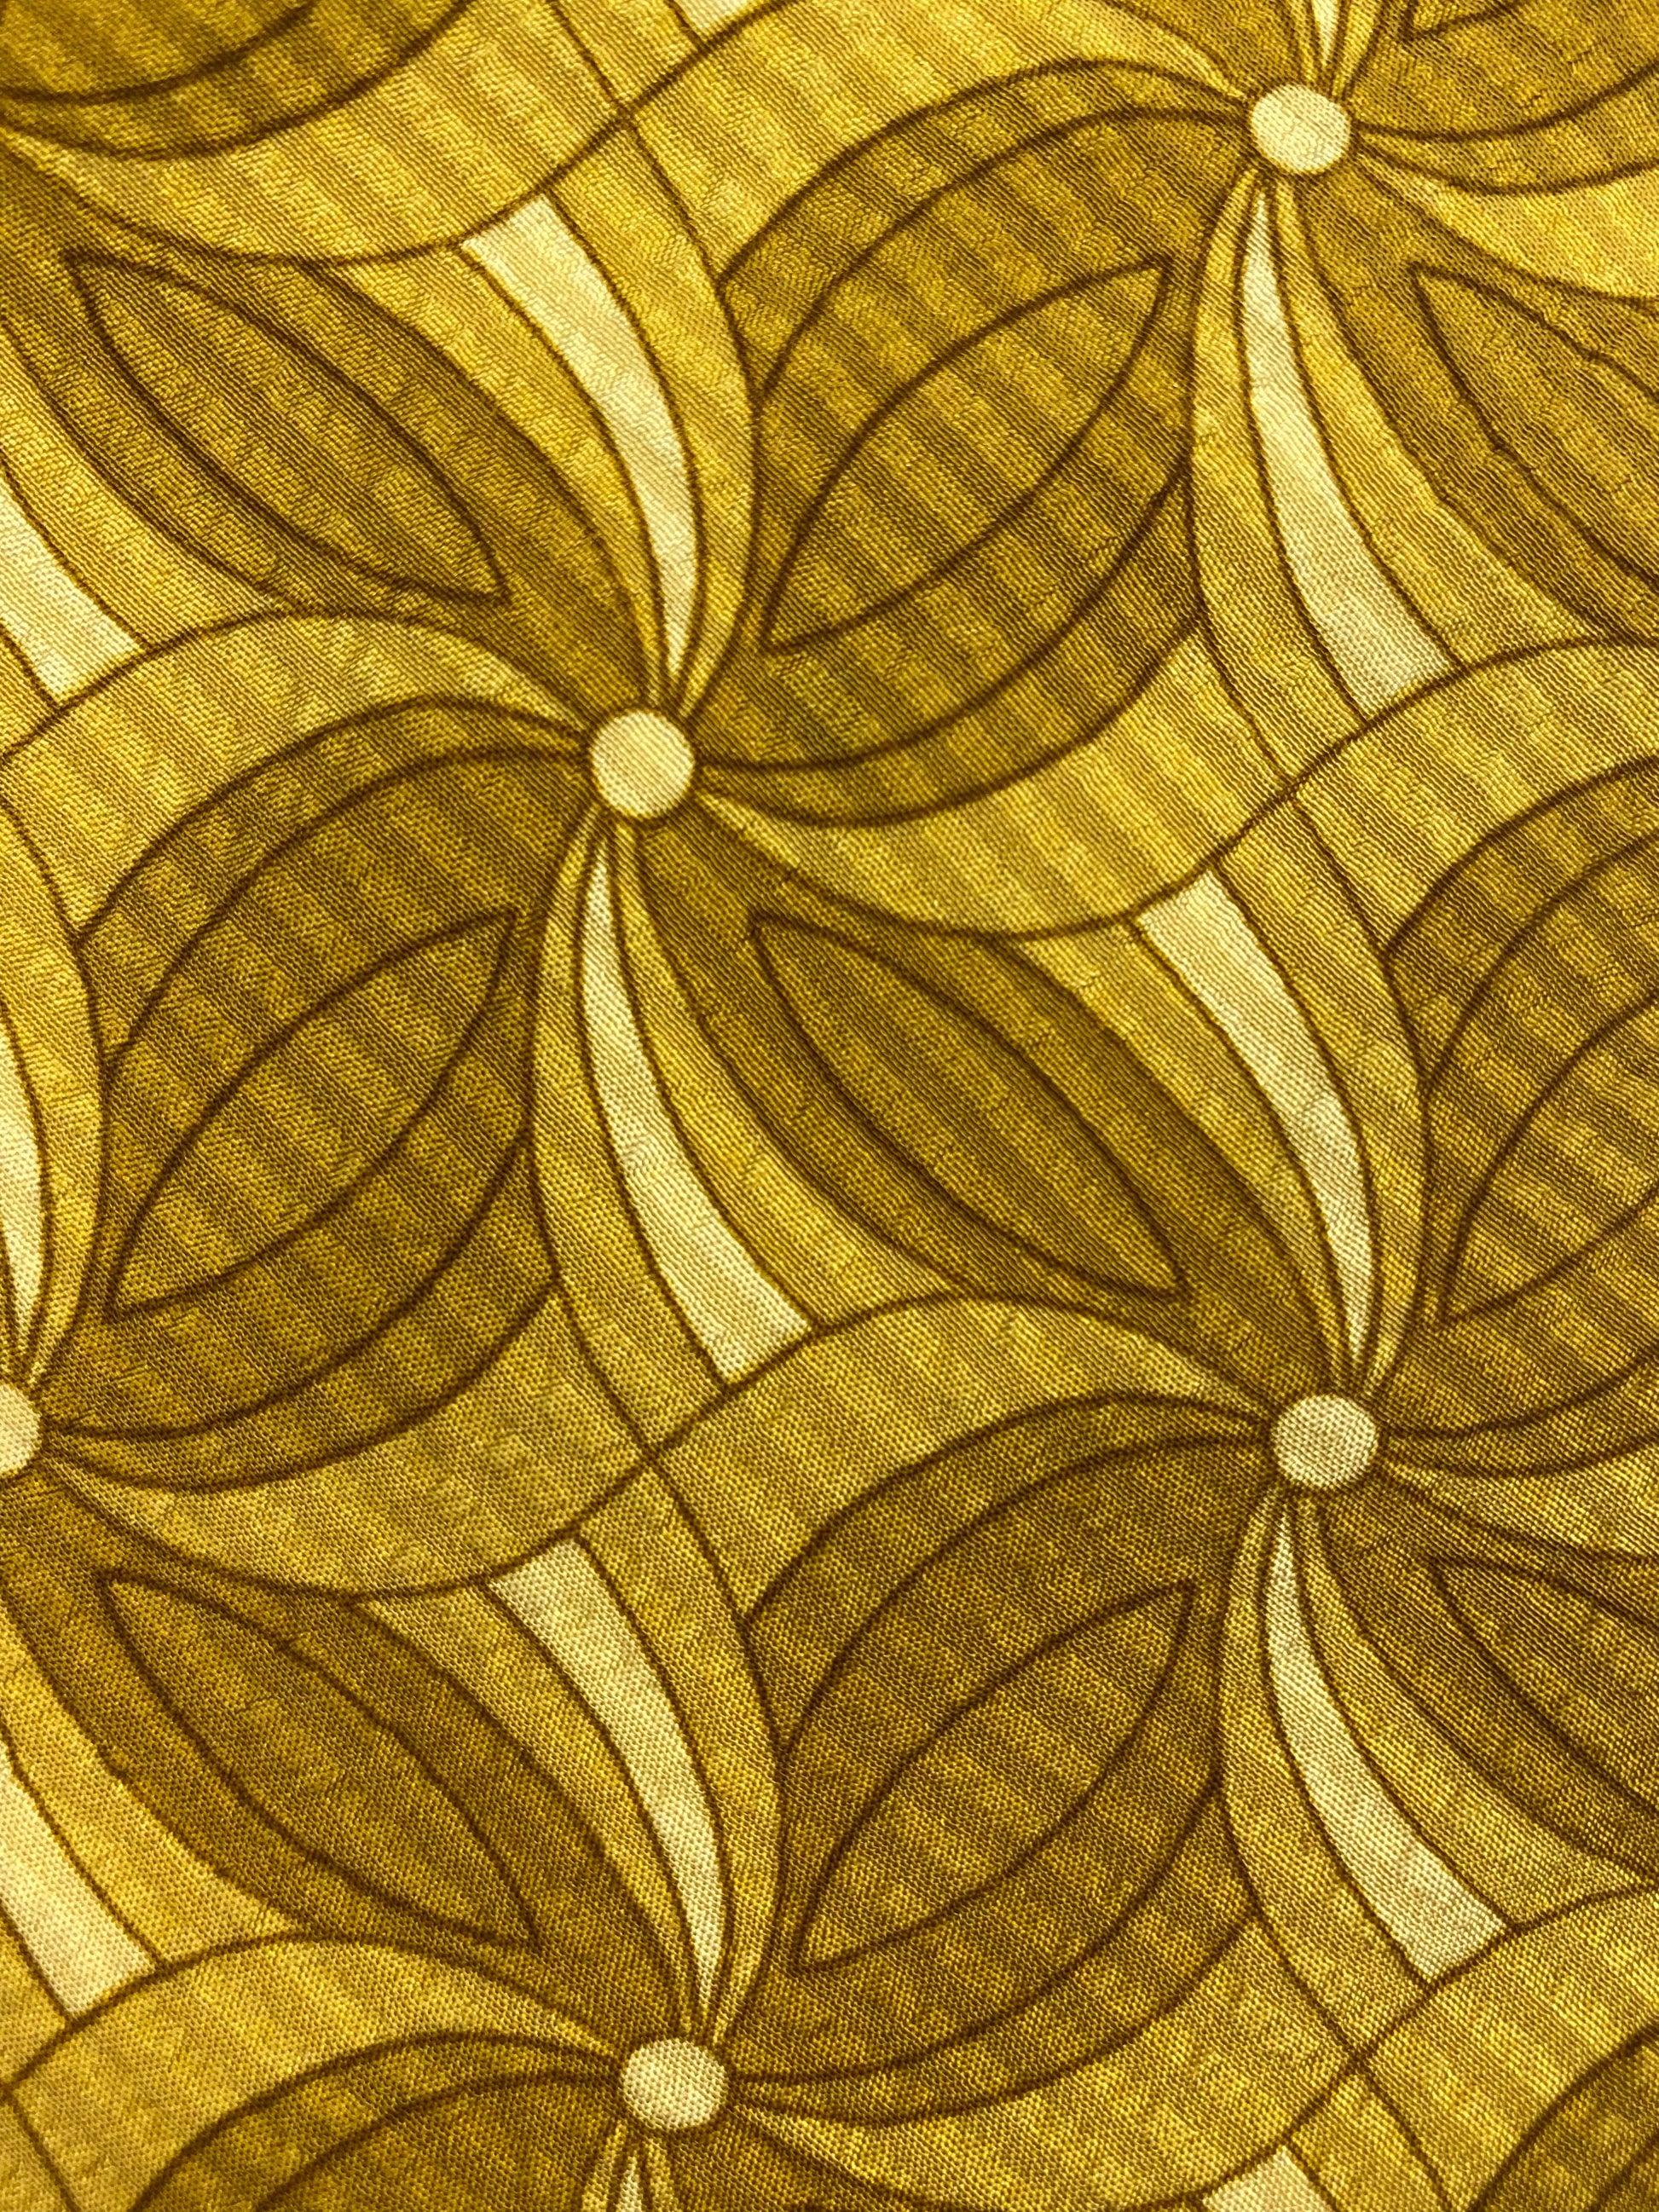 Pattern detail close-up of: 90s Deadstock Silk Necktie, Men's Vintage Gold Floral Geometric Pattern Tie, NOS